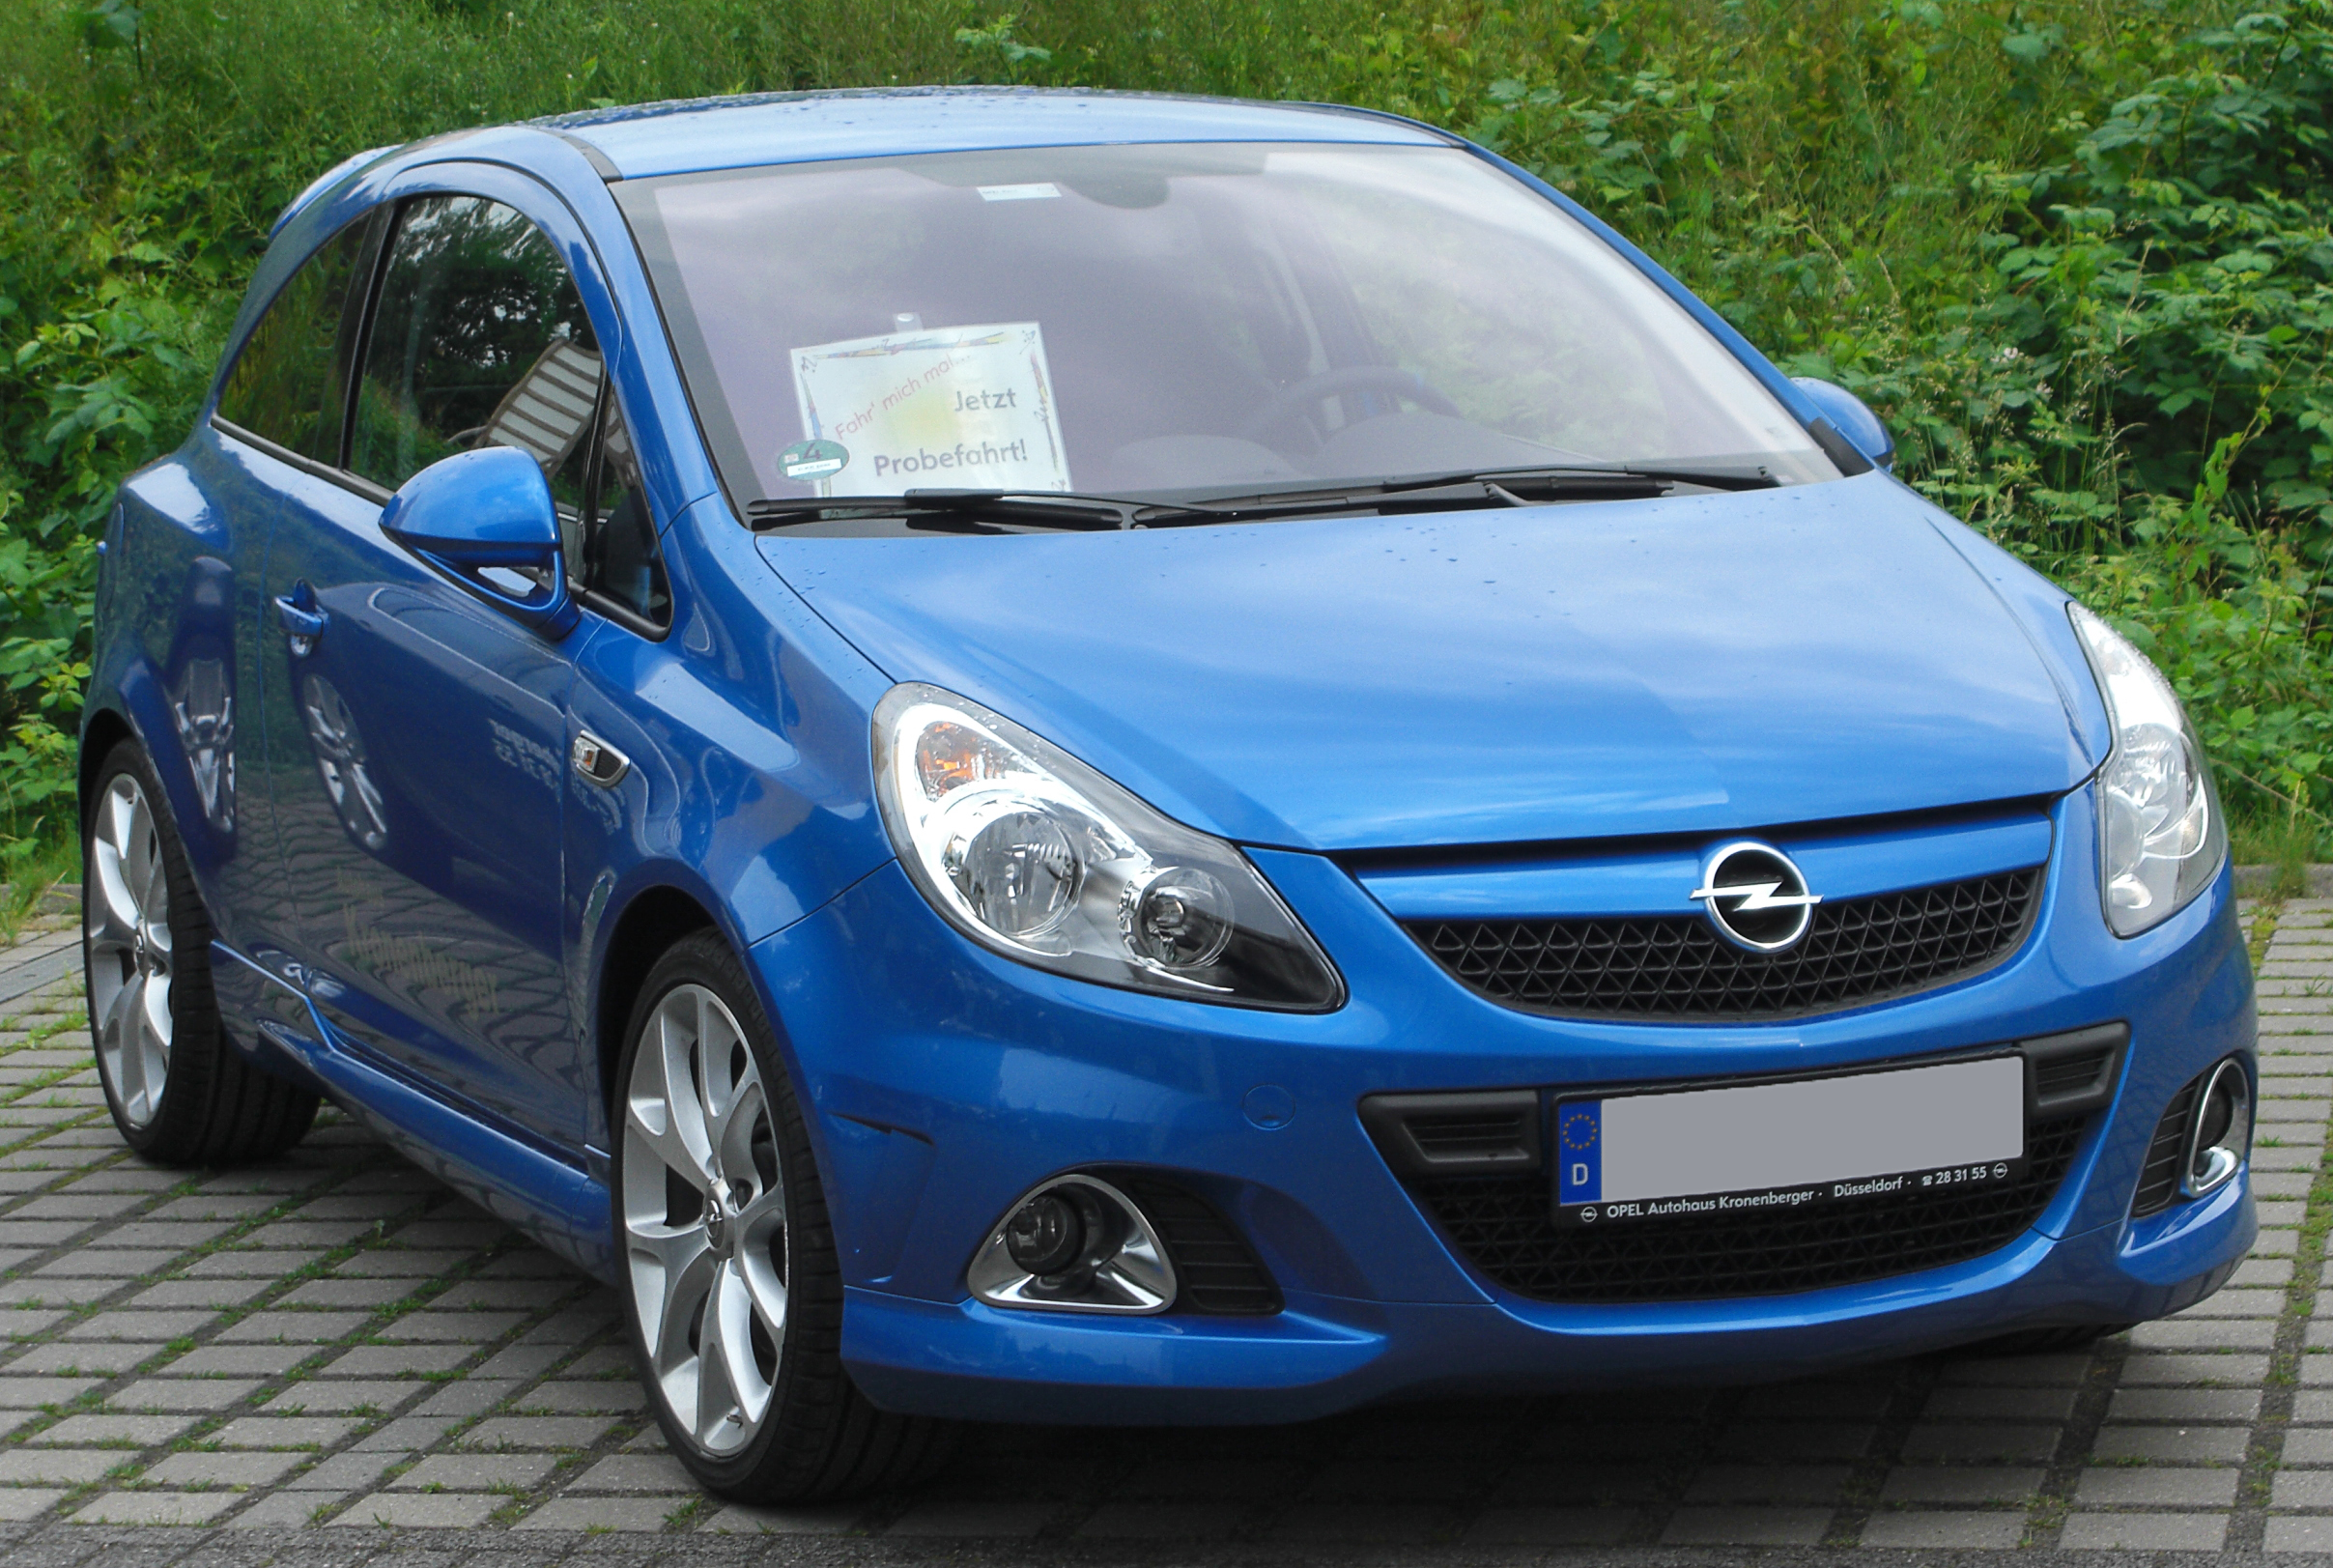 File:Opel Meriva 1.6 Facelift.JPG - Wikipedia